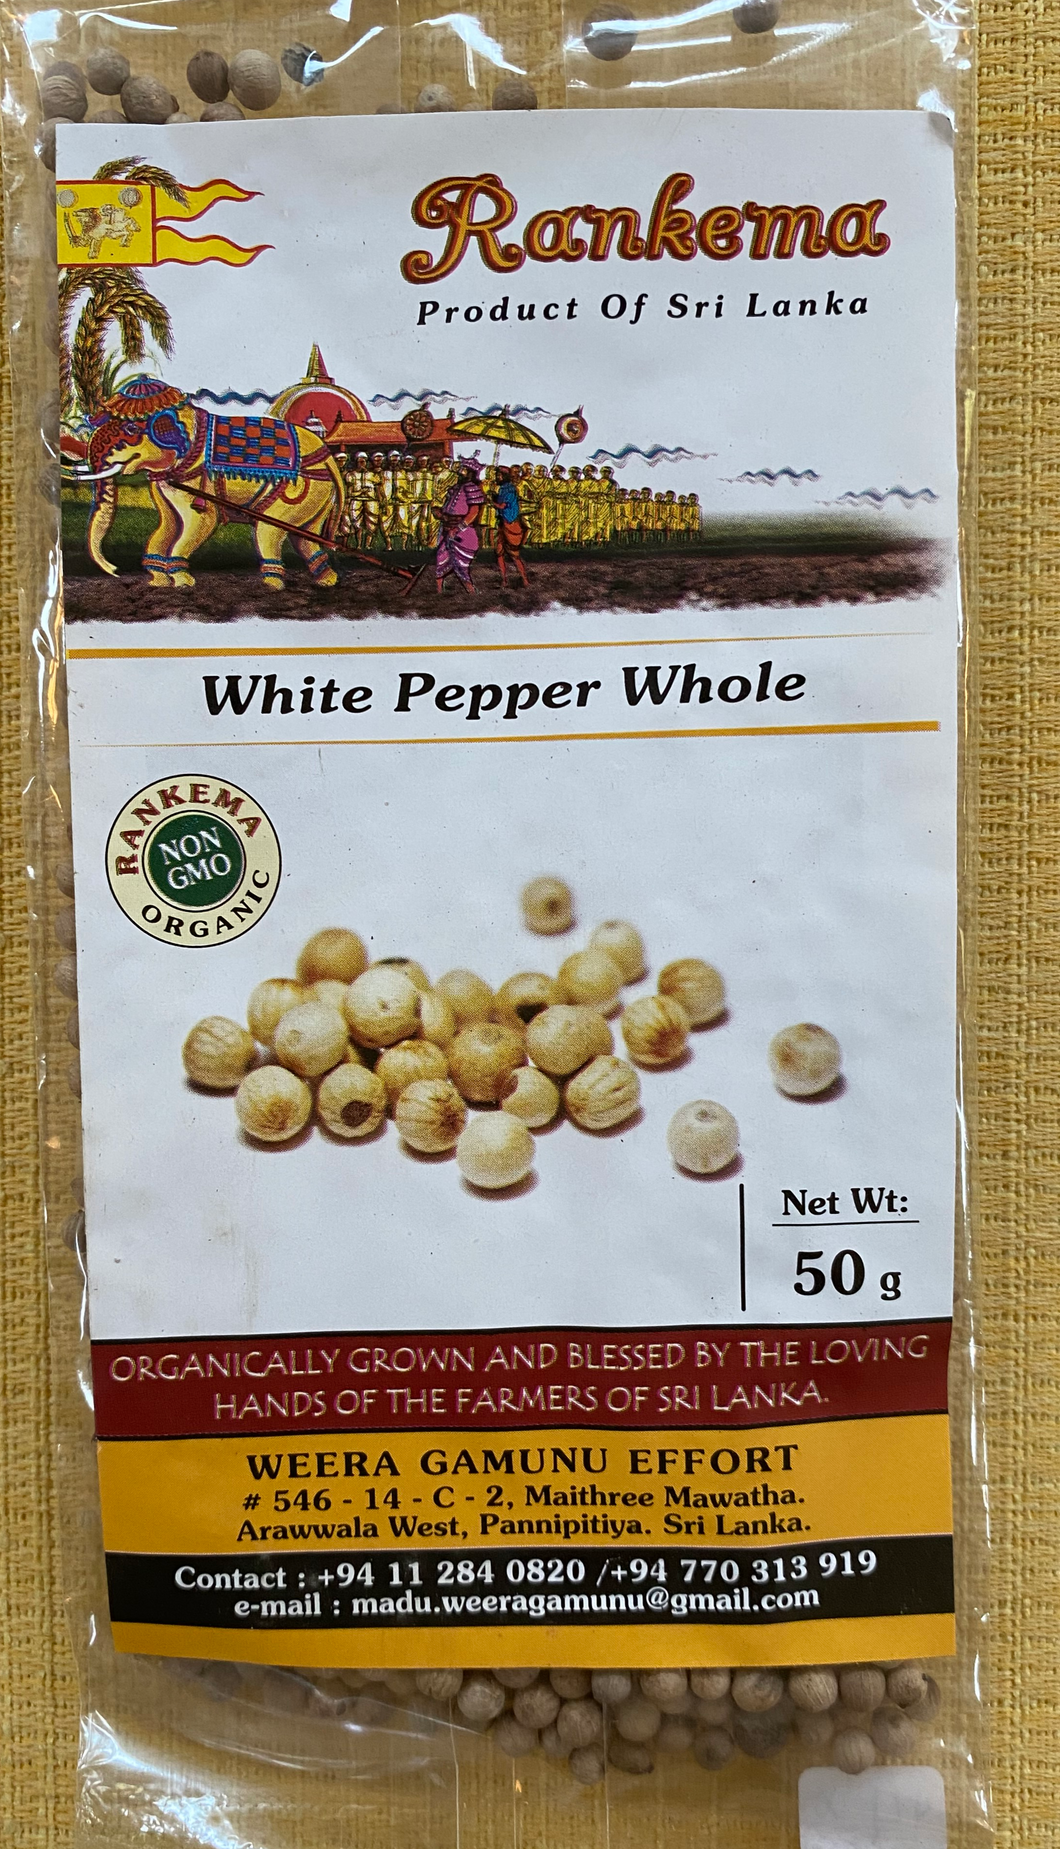 White Pepper Whole from Sri Lanka (Ceylon)